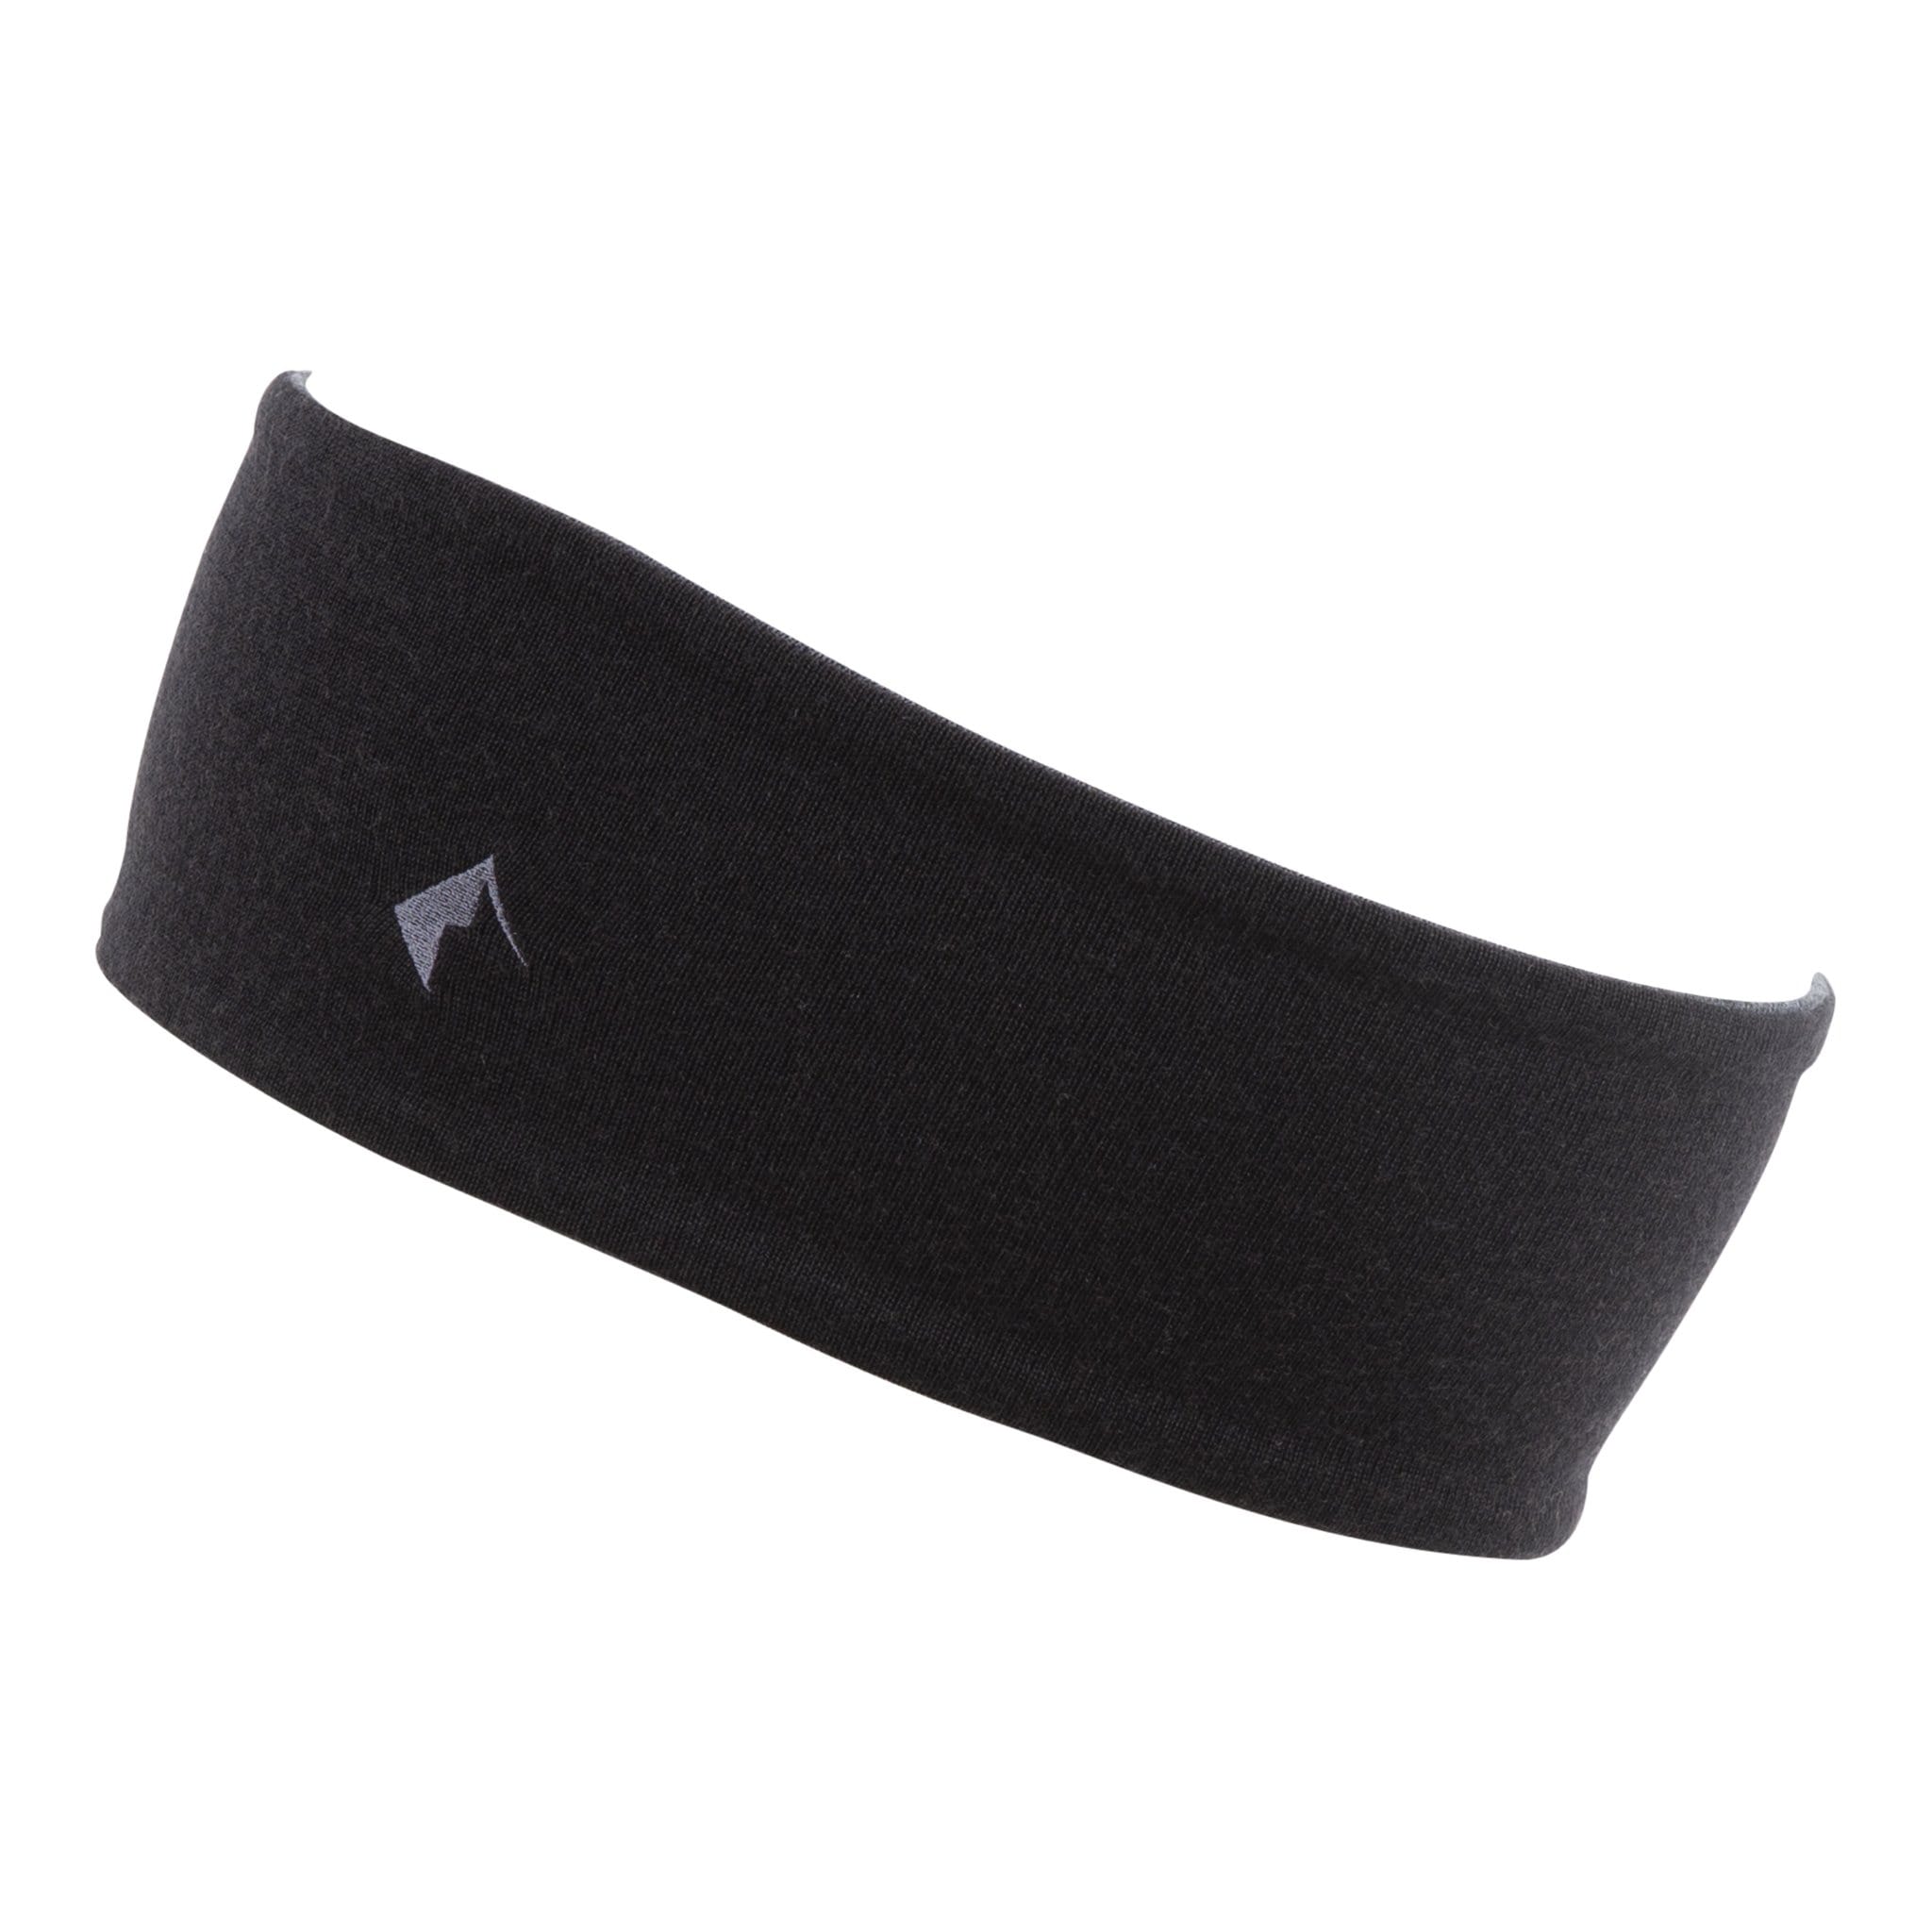 Merino Sport Fleece Headband – Half-Moon Outfitters